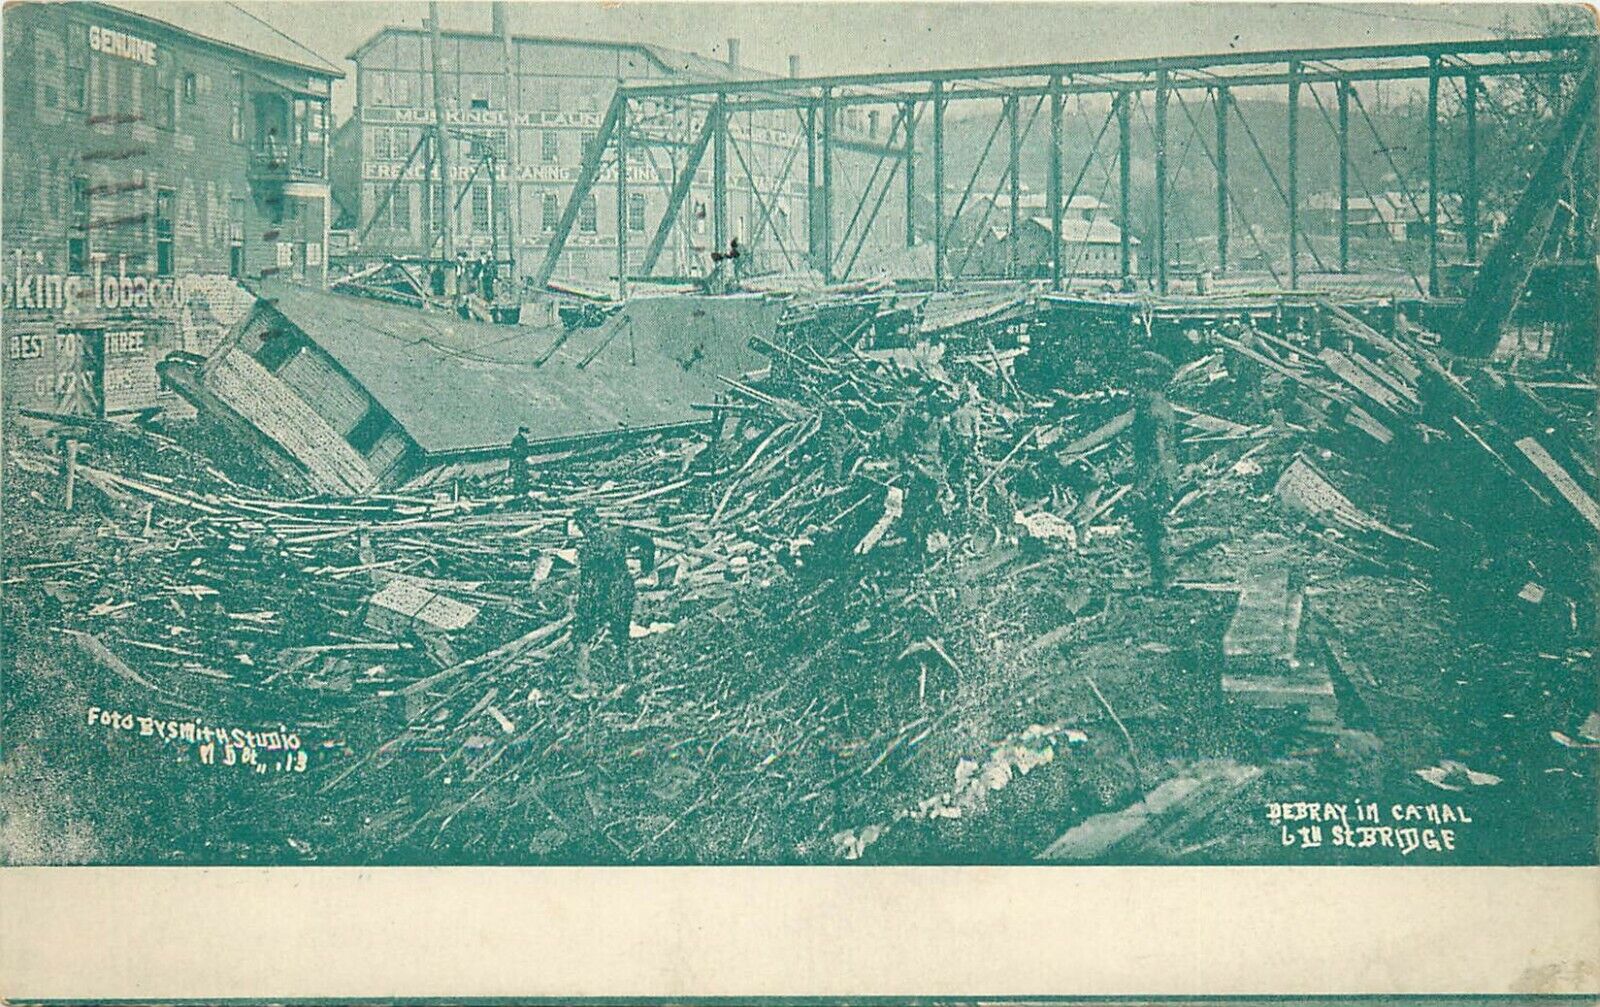 c1913 Postcard; Zanesville OH Debris in Canal at 6th Street Bridge after Flood